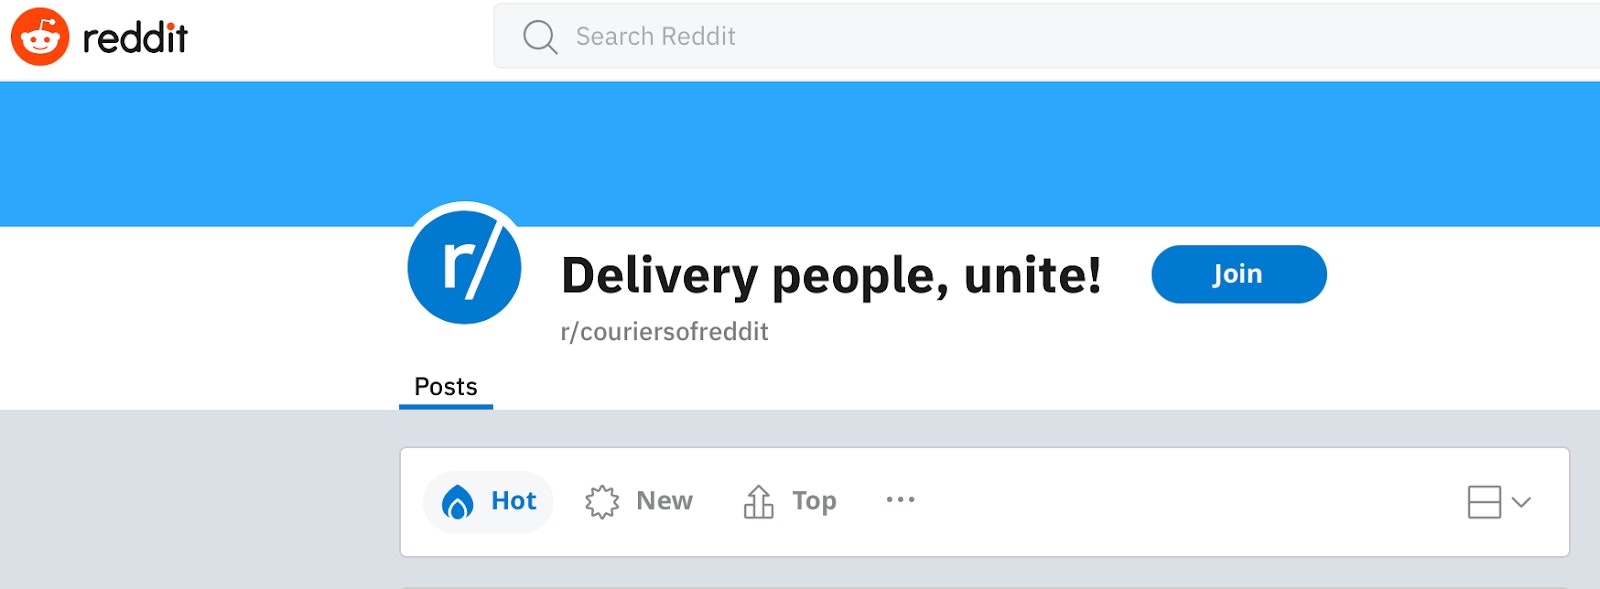 Reddit Delivery People, Unite! thread